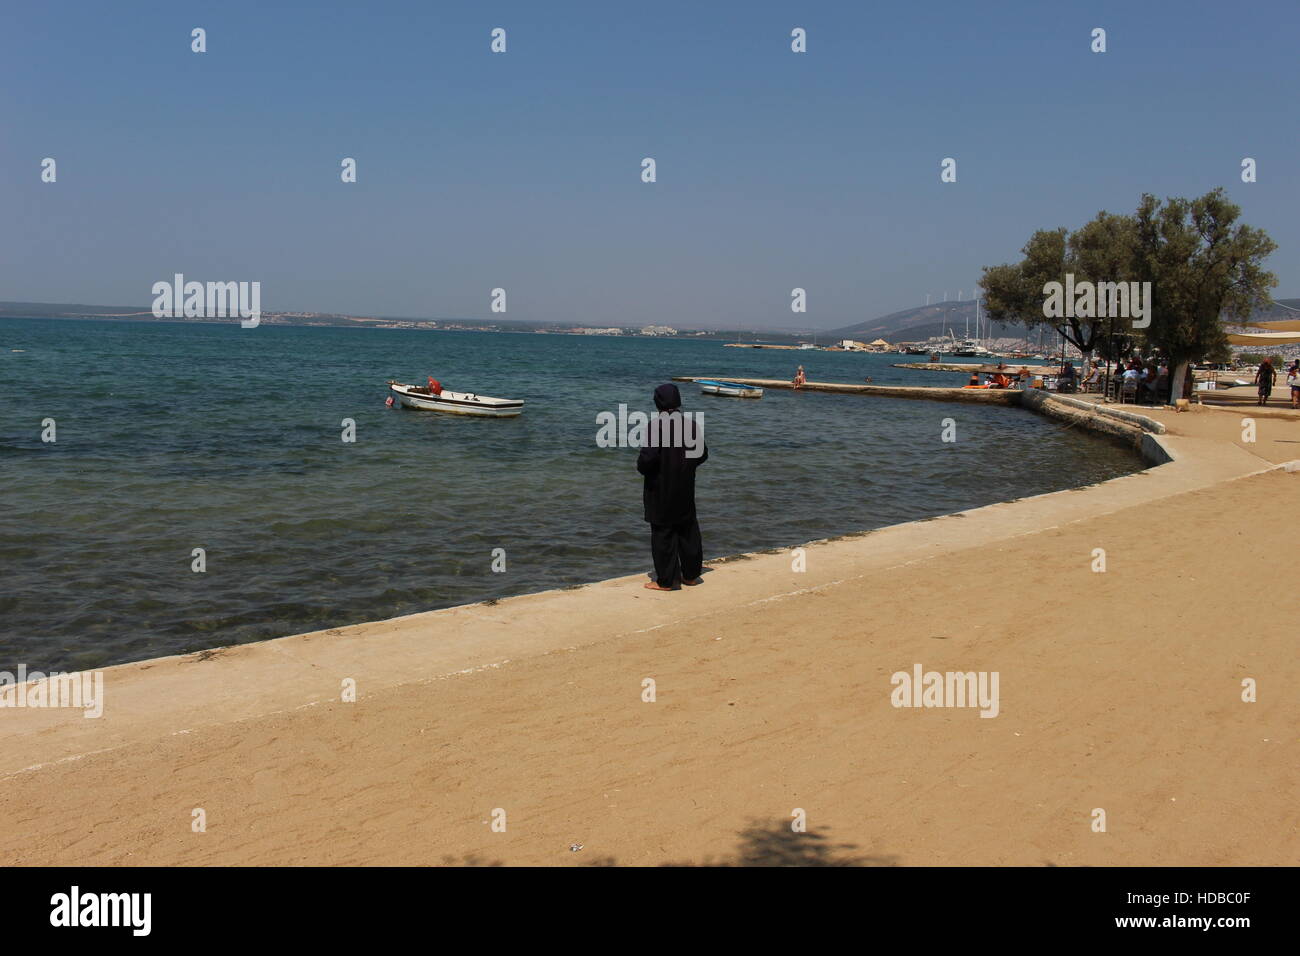 L'islam islamici spiaggia estate usura burkini donna vista baia Akbuk Turchia barca Foto Stock